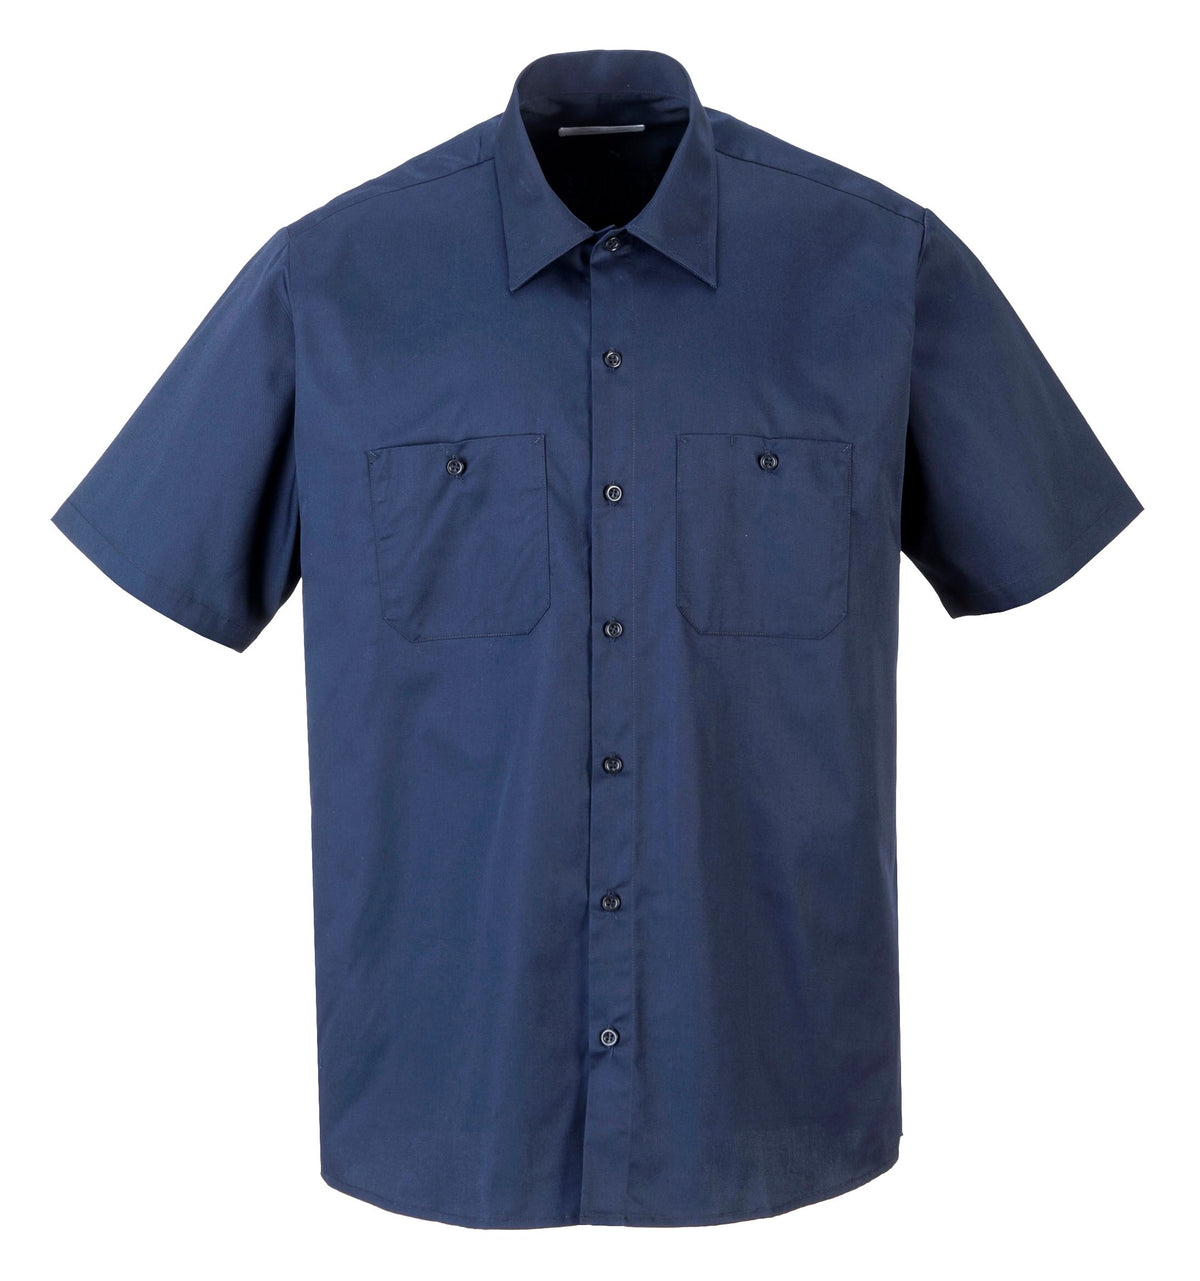 Industrial Work Shirt, Short Sleeve - Safety Shirts for Men